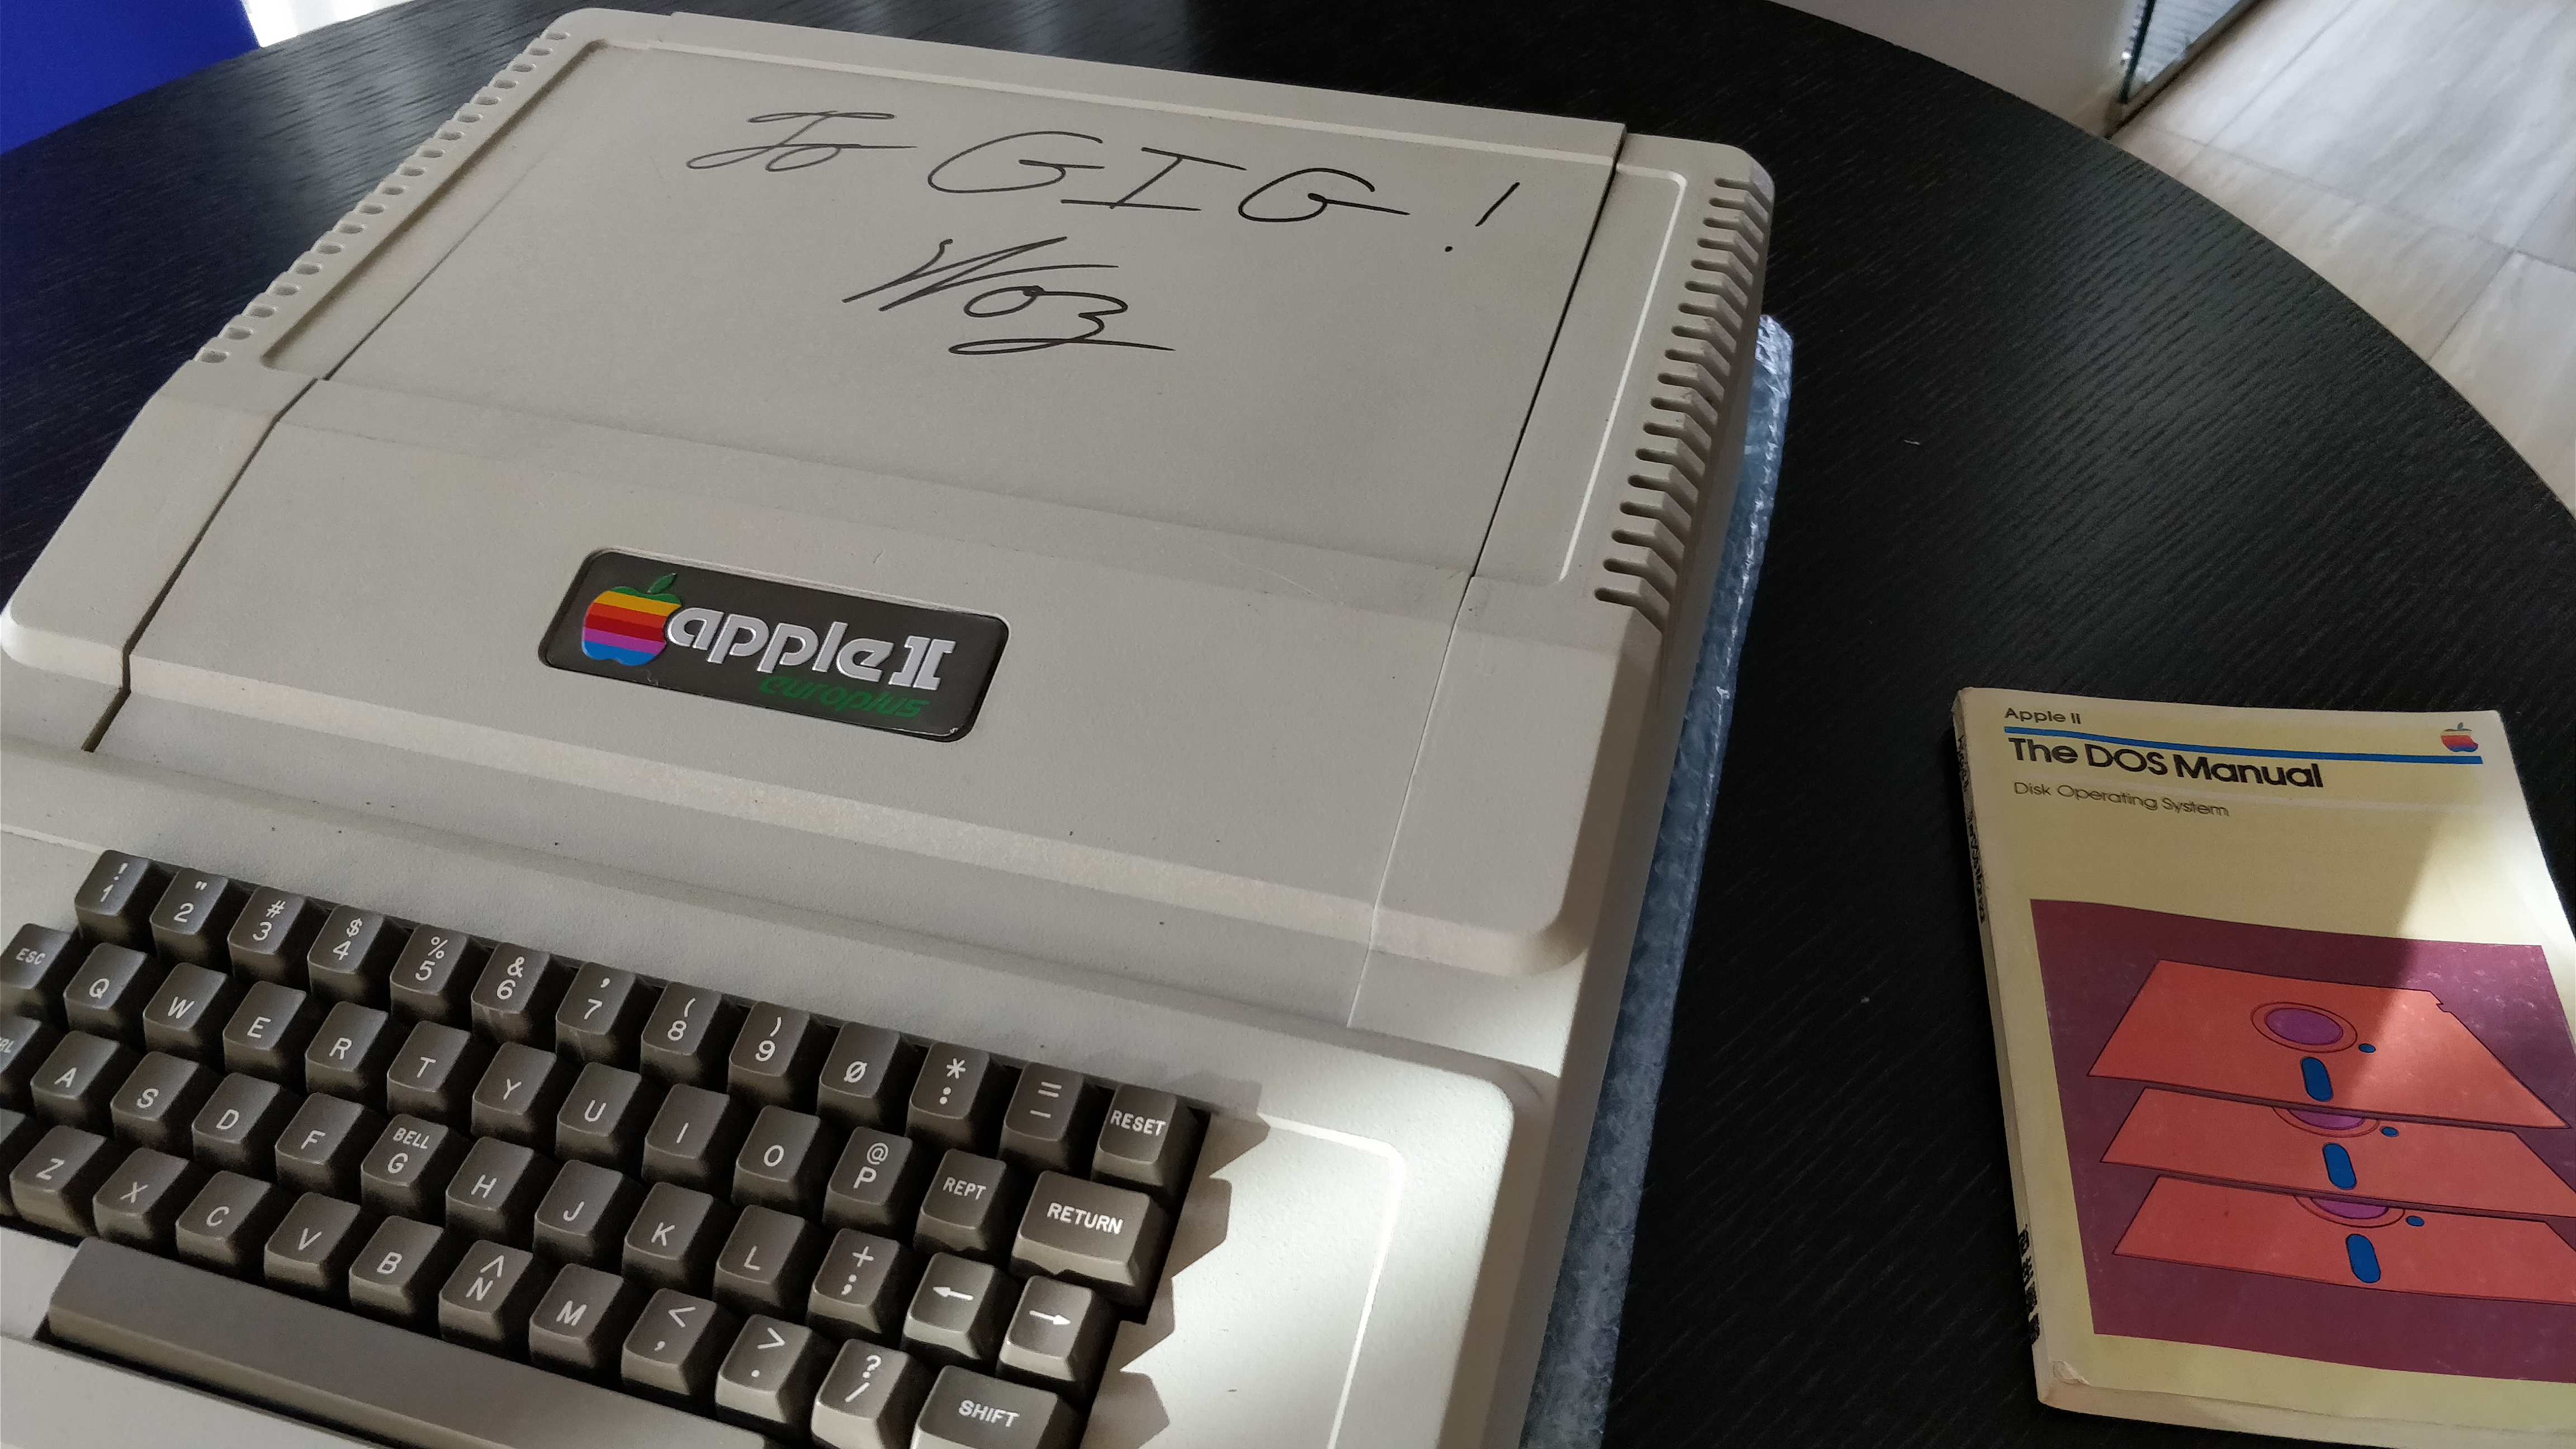 GiG's Apple II signed by Woz himself!